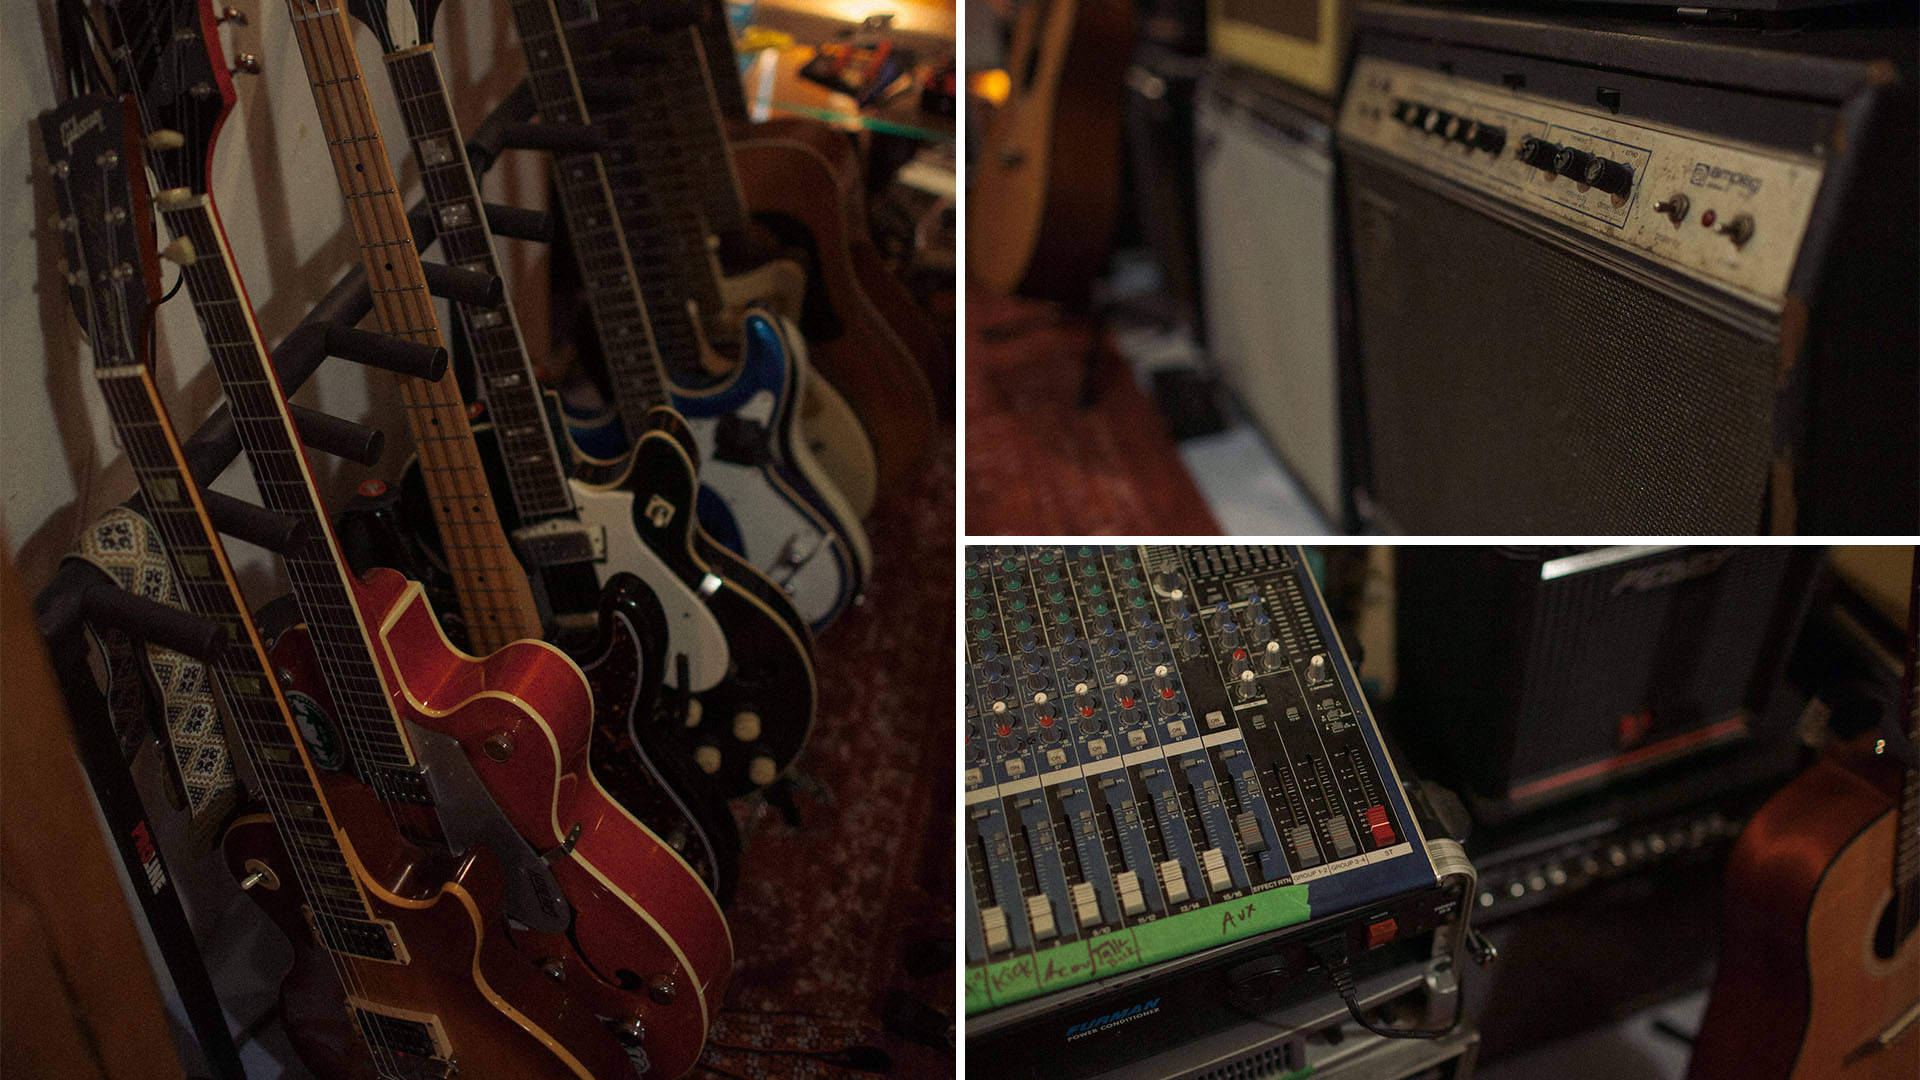 A portion of Starlin's studio equipment